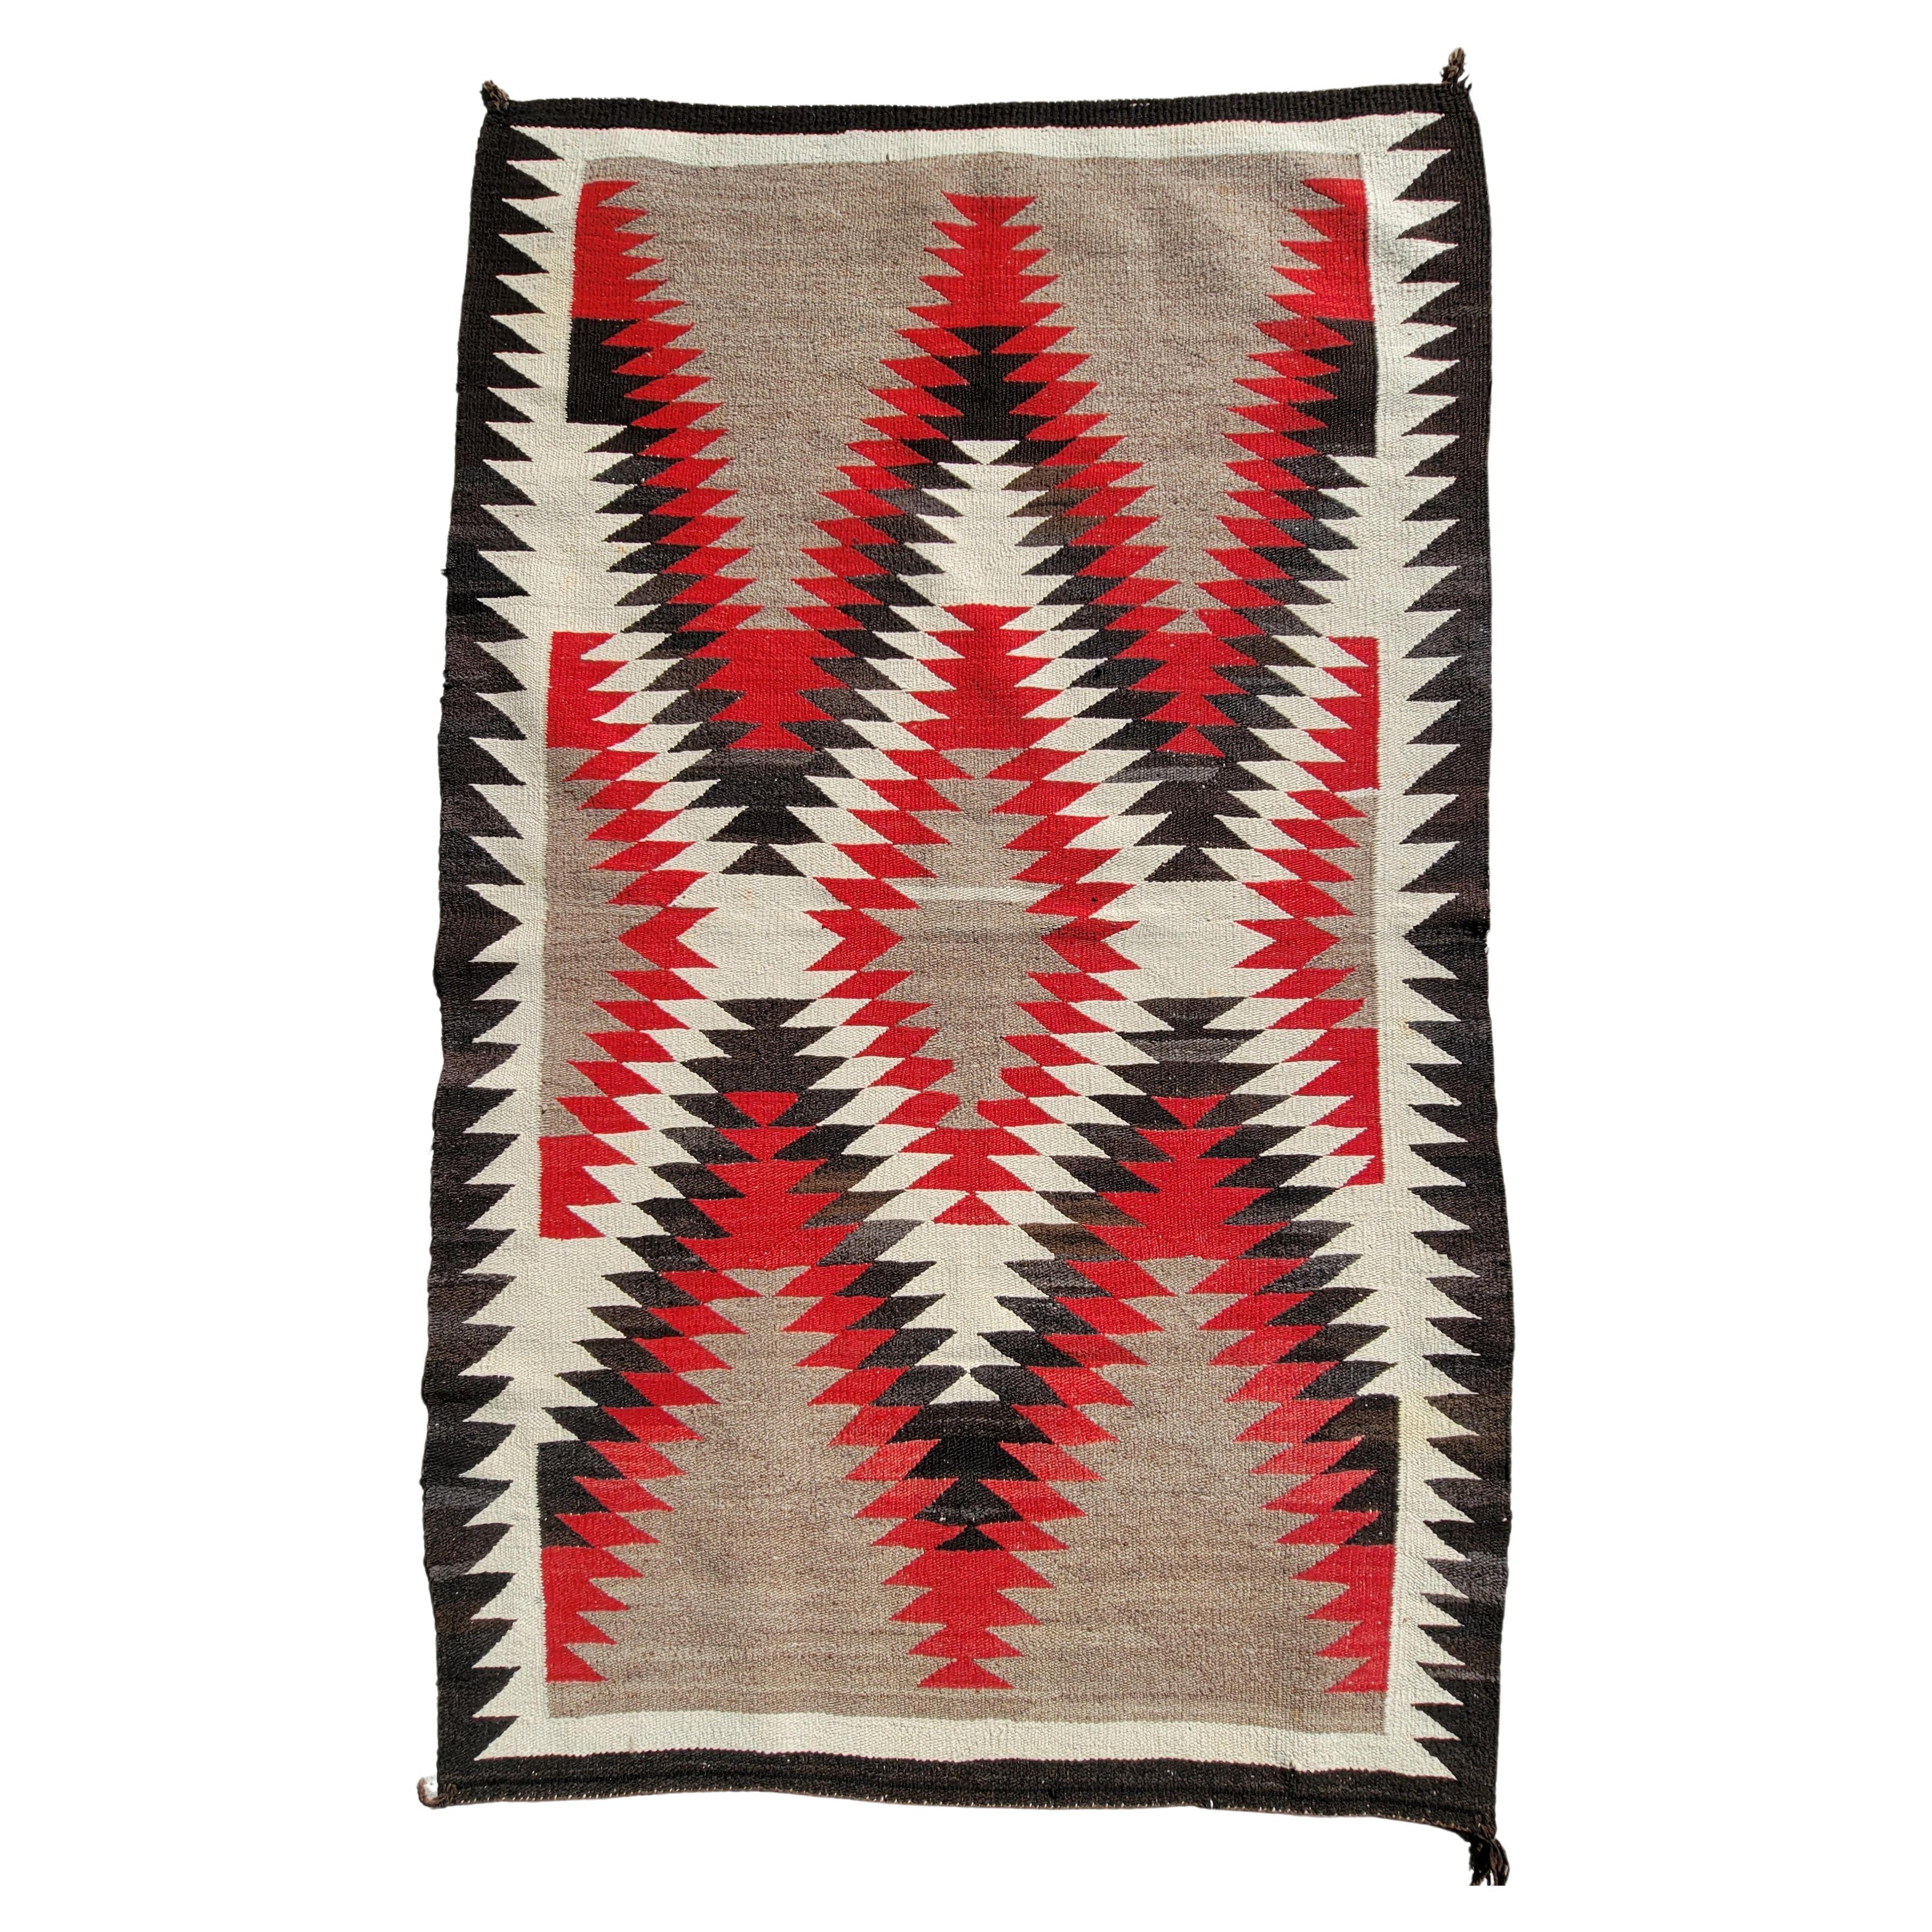 Early Navajo Geometric Weaving